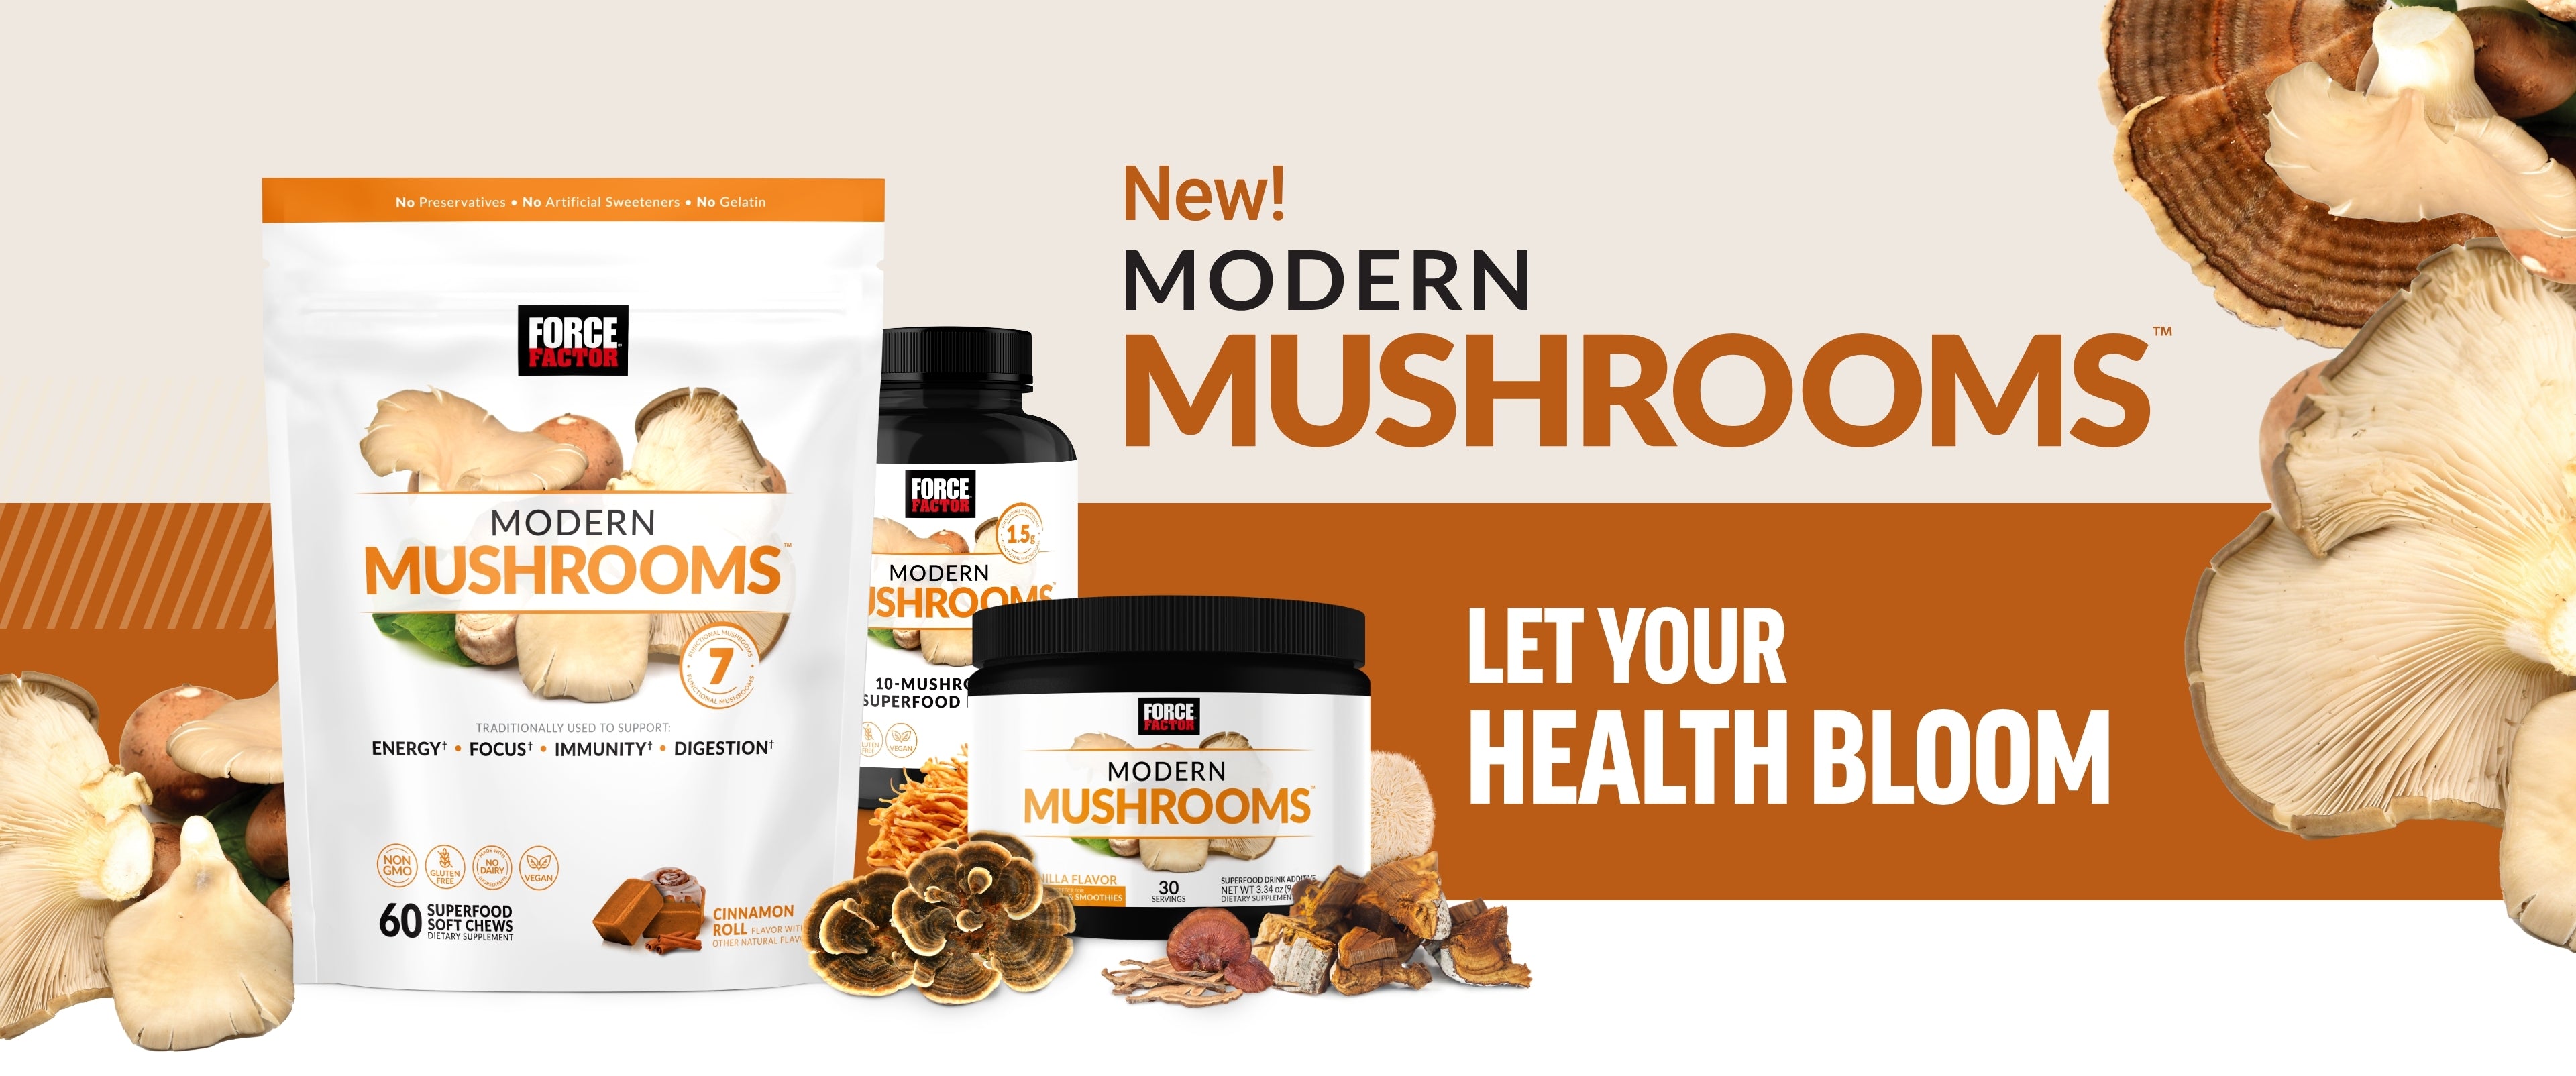 New! Modern Mushrooms. Let Your Health Bloom